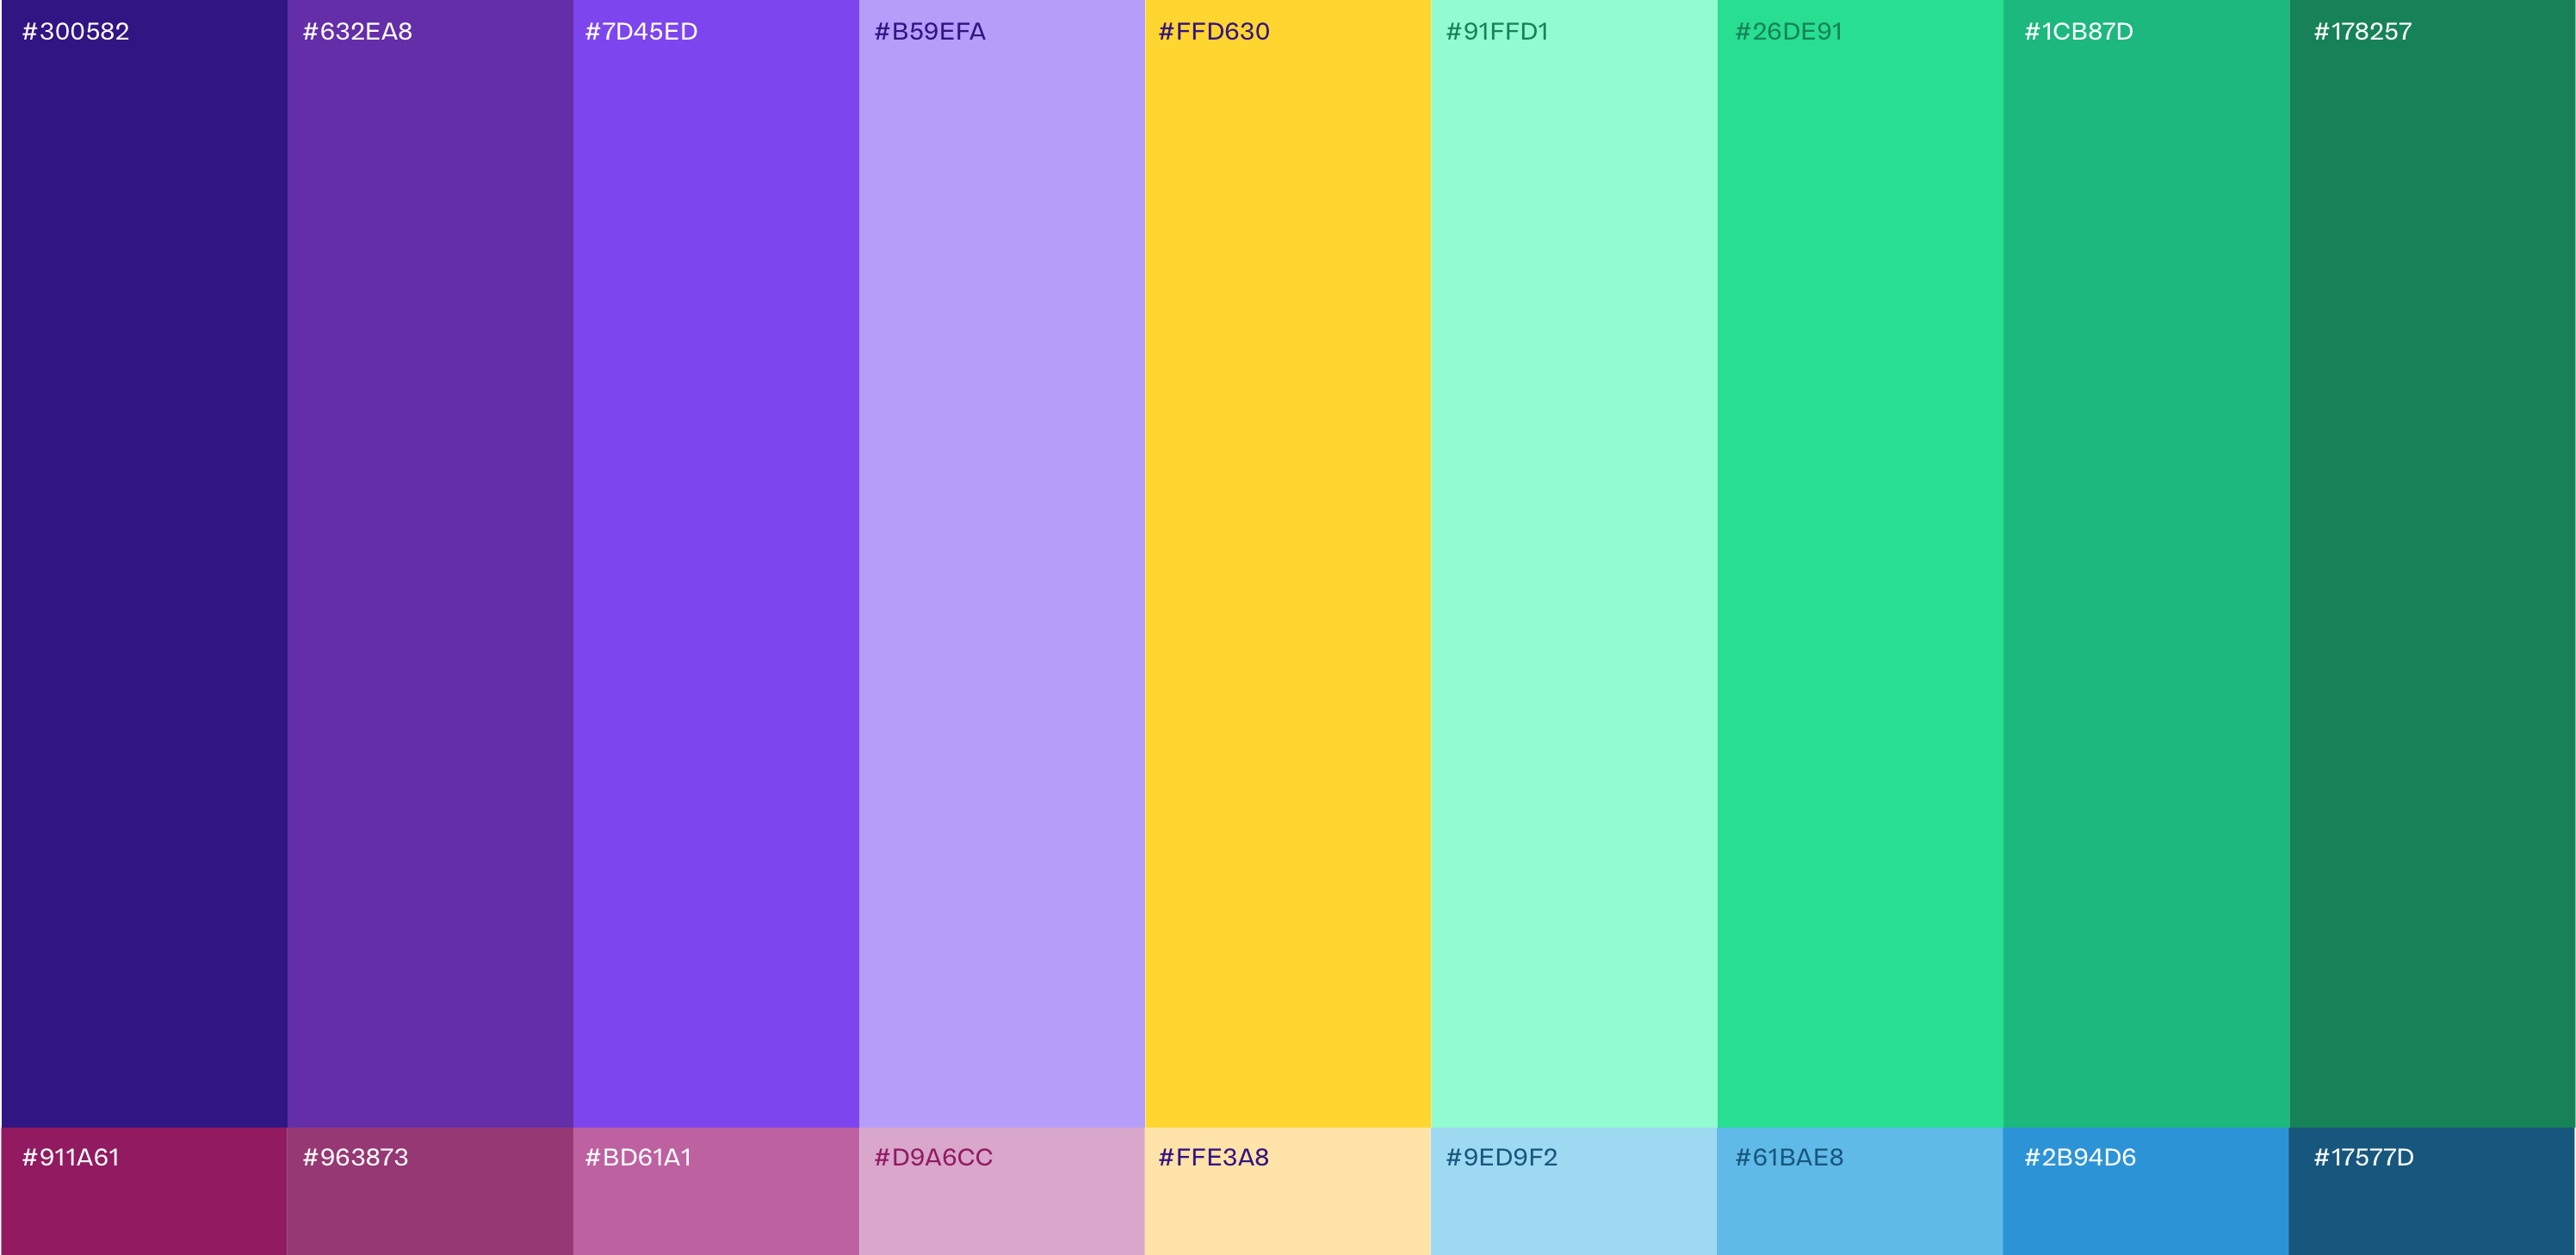 Ten vertical bands depicting the Matter of Focus colour palette